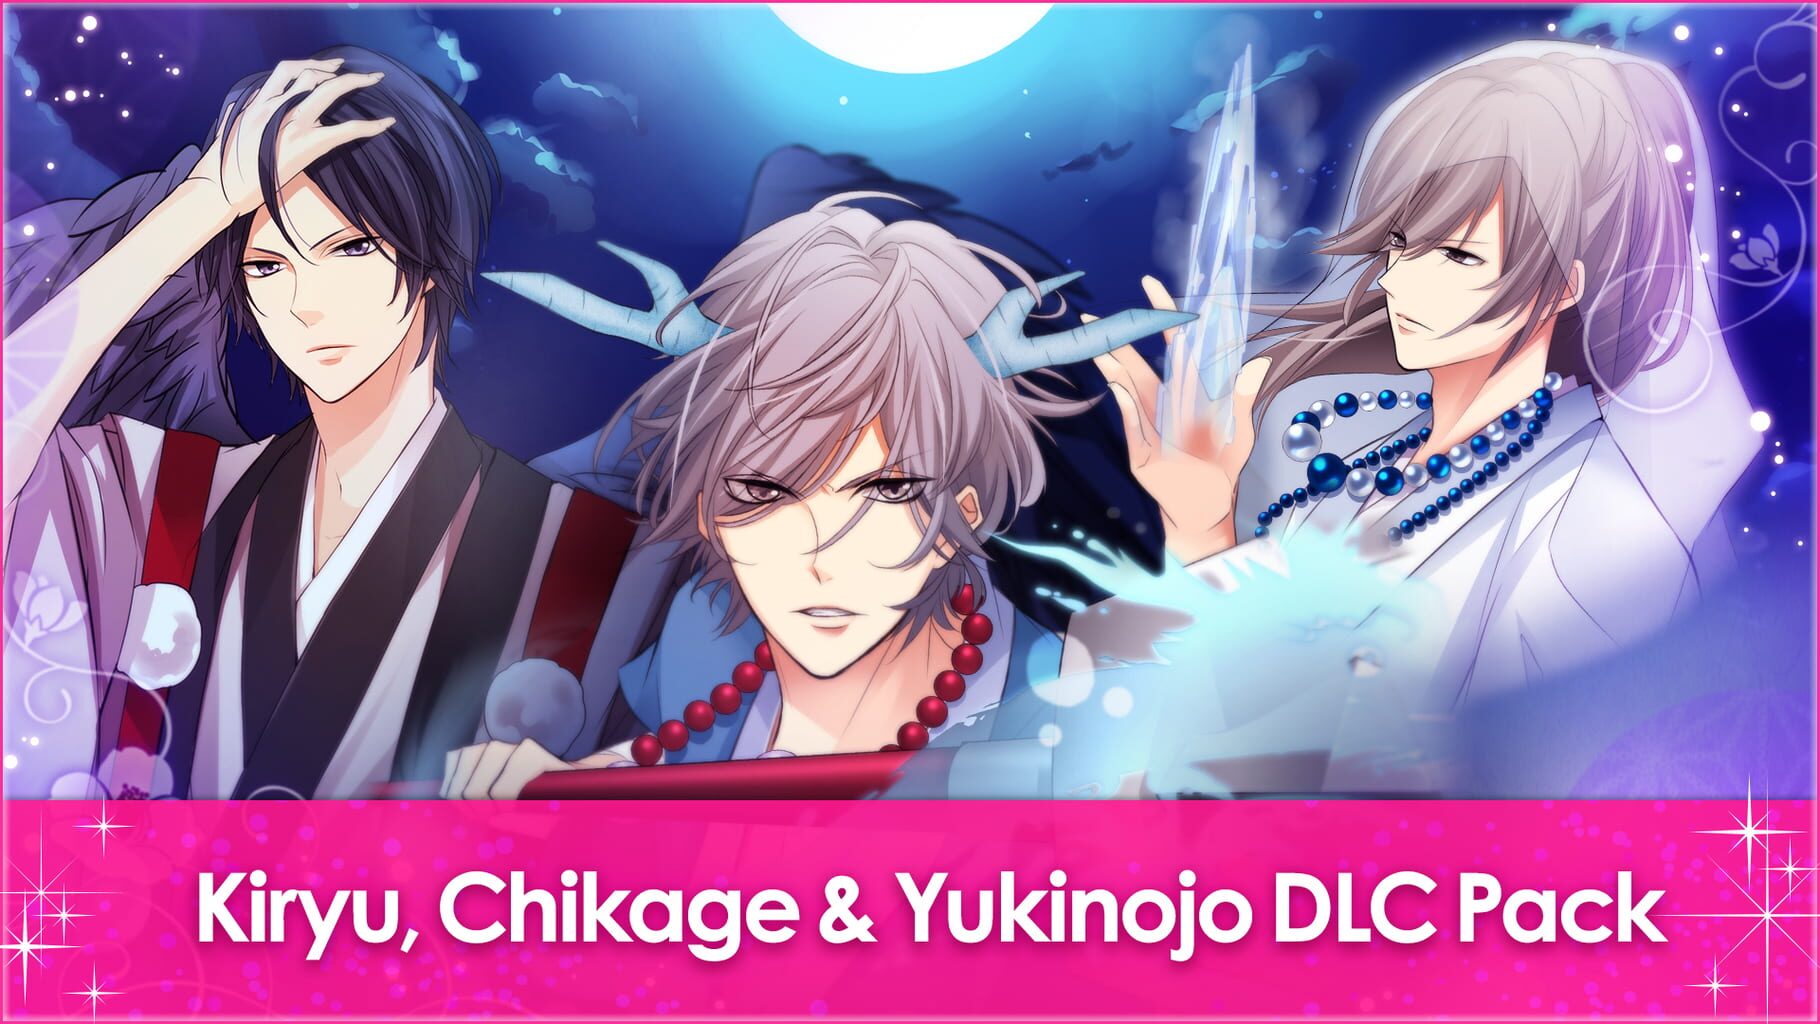 Enchanted in the Moonlight: Kiryu, Chikage & Yukinojo DLC Pack artwork